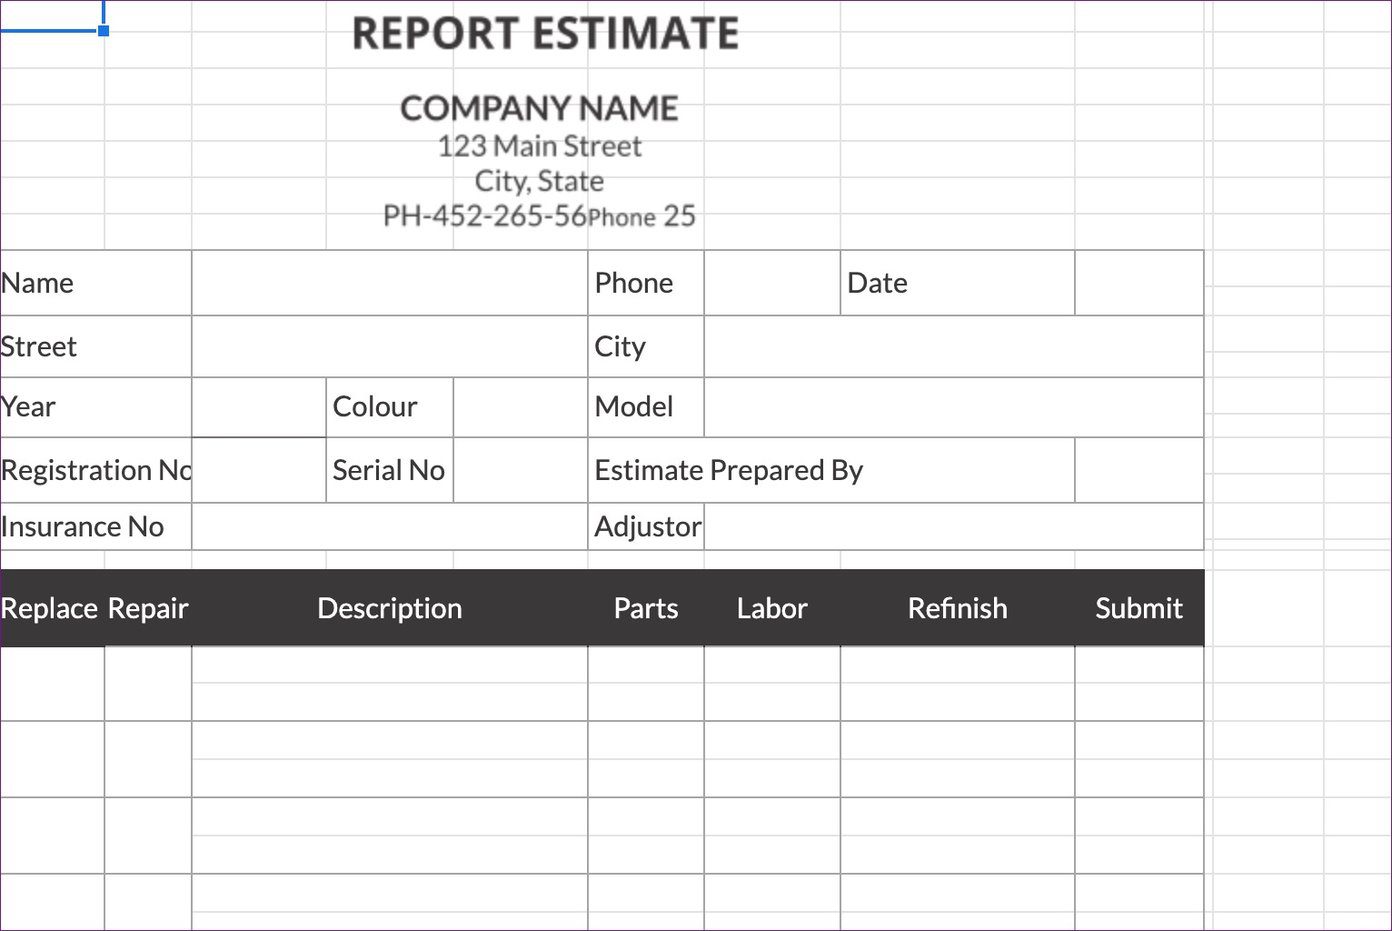 Report estimate